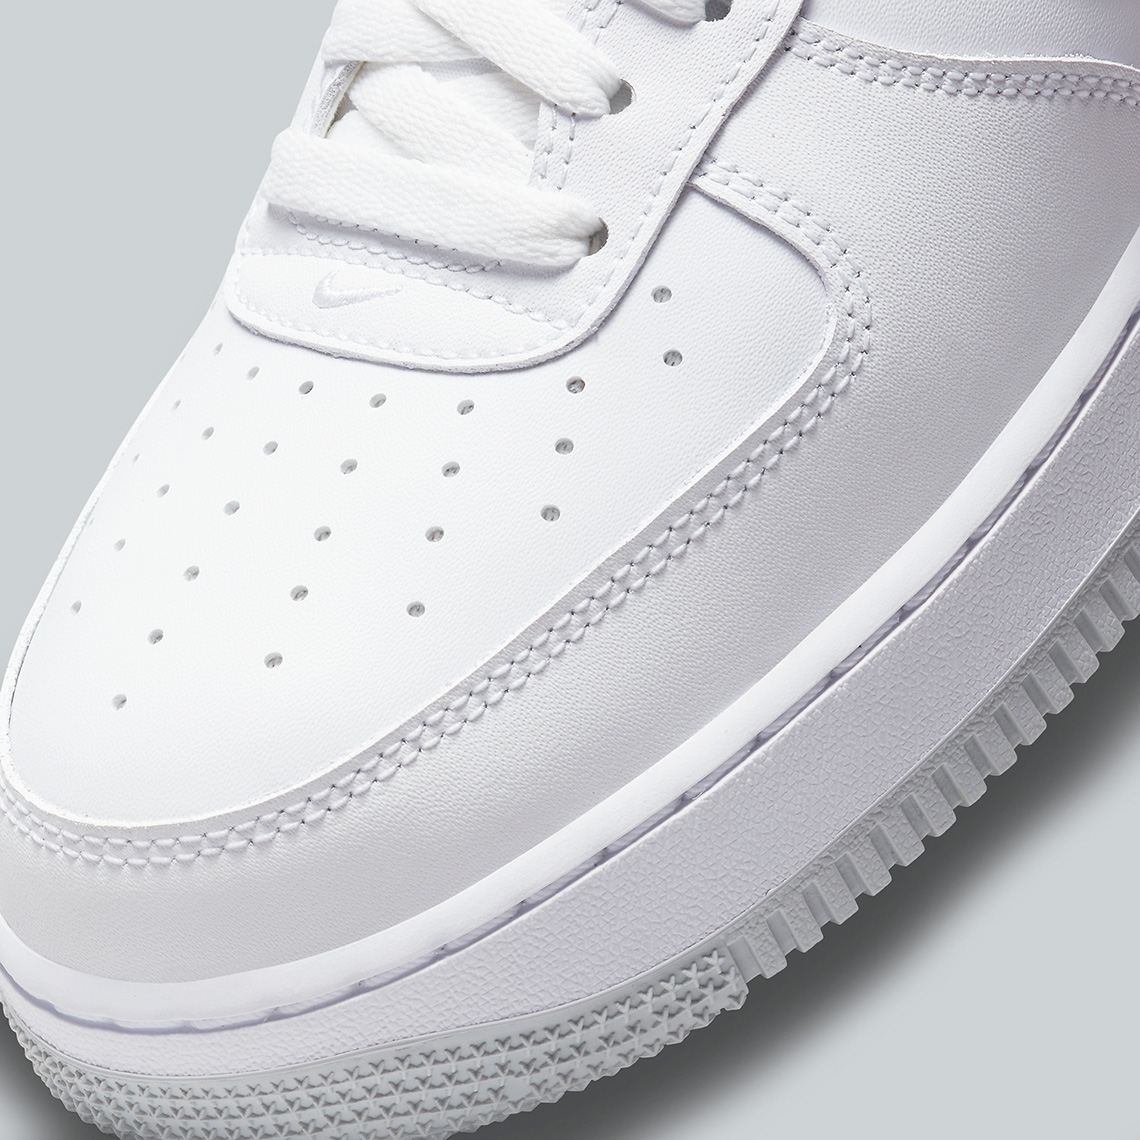 Nike Air Max Plus TN Ultra Classic Mens Sport Running Shoes White Black 526301-008 Dc2911 100 6